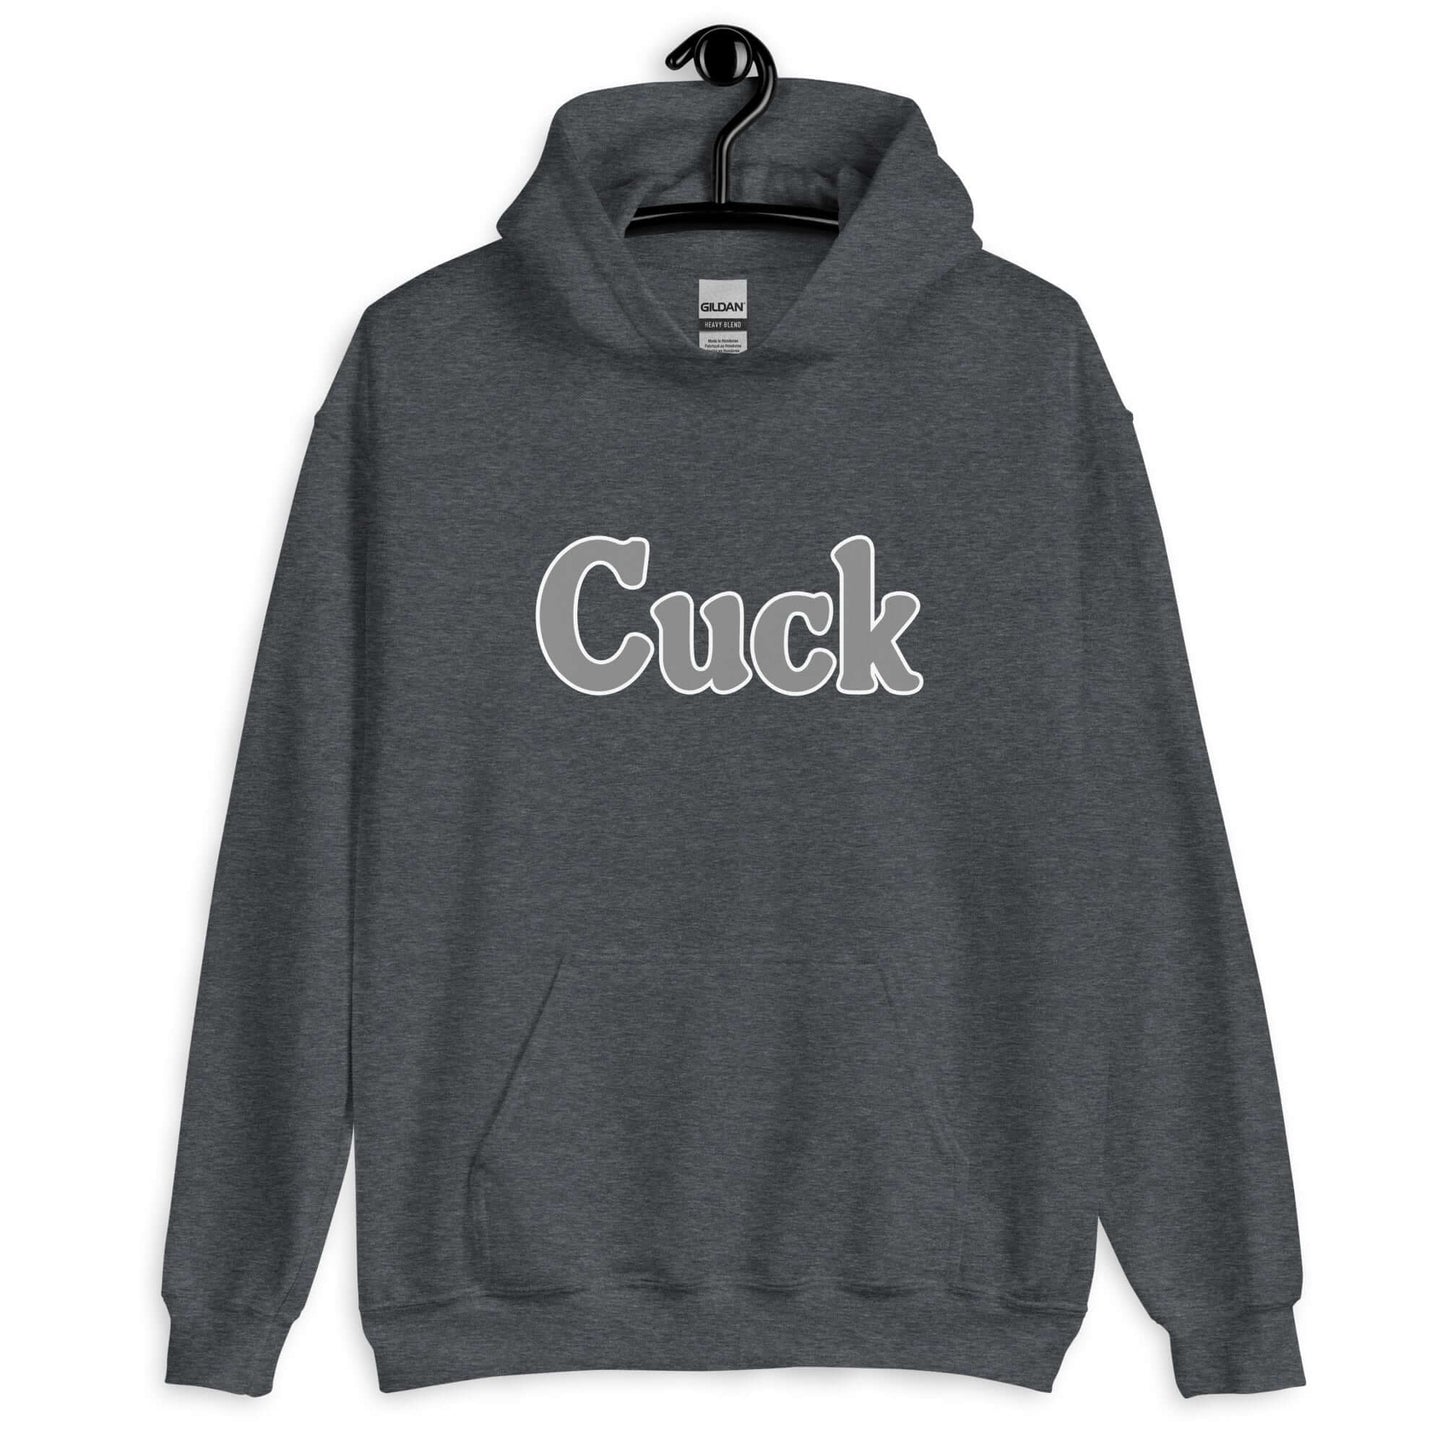 Dark heather grey hoodie sweatshirt with the word Cuck printed on the front in grey.